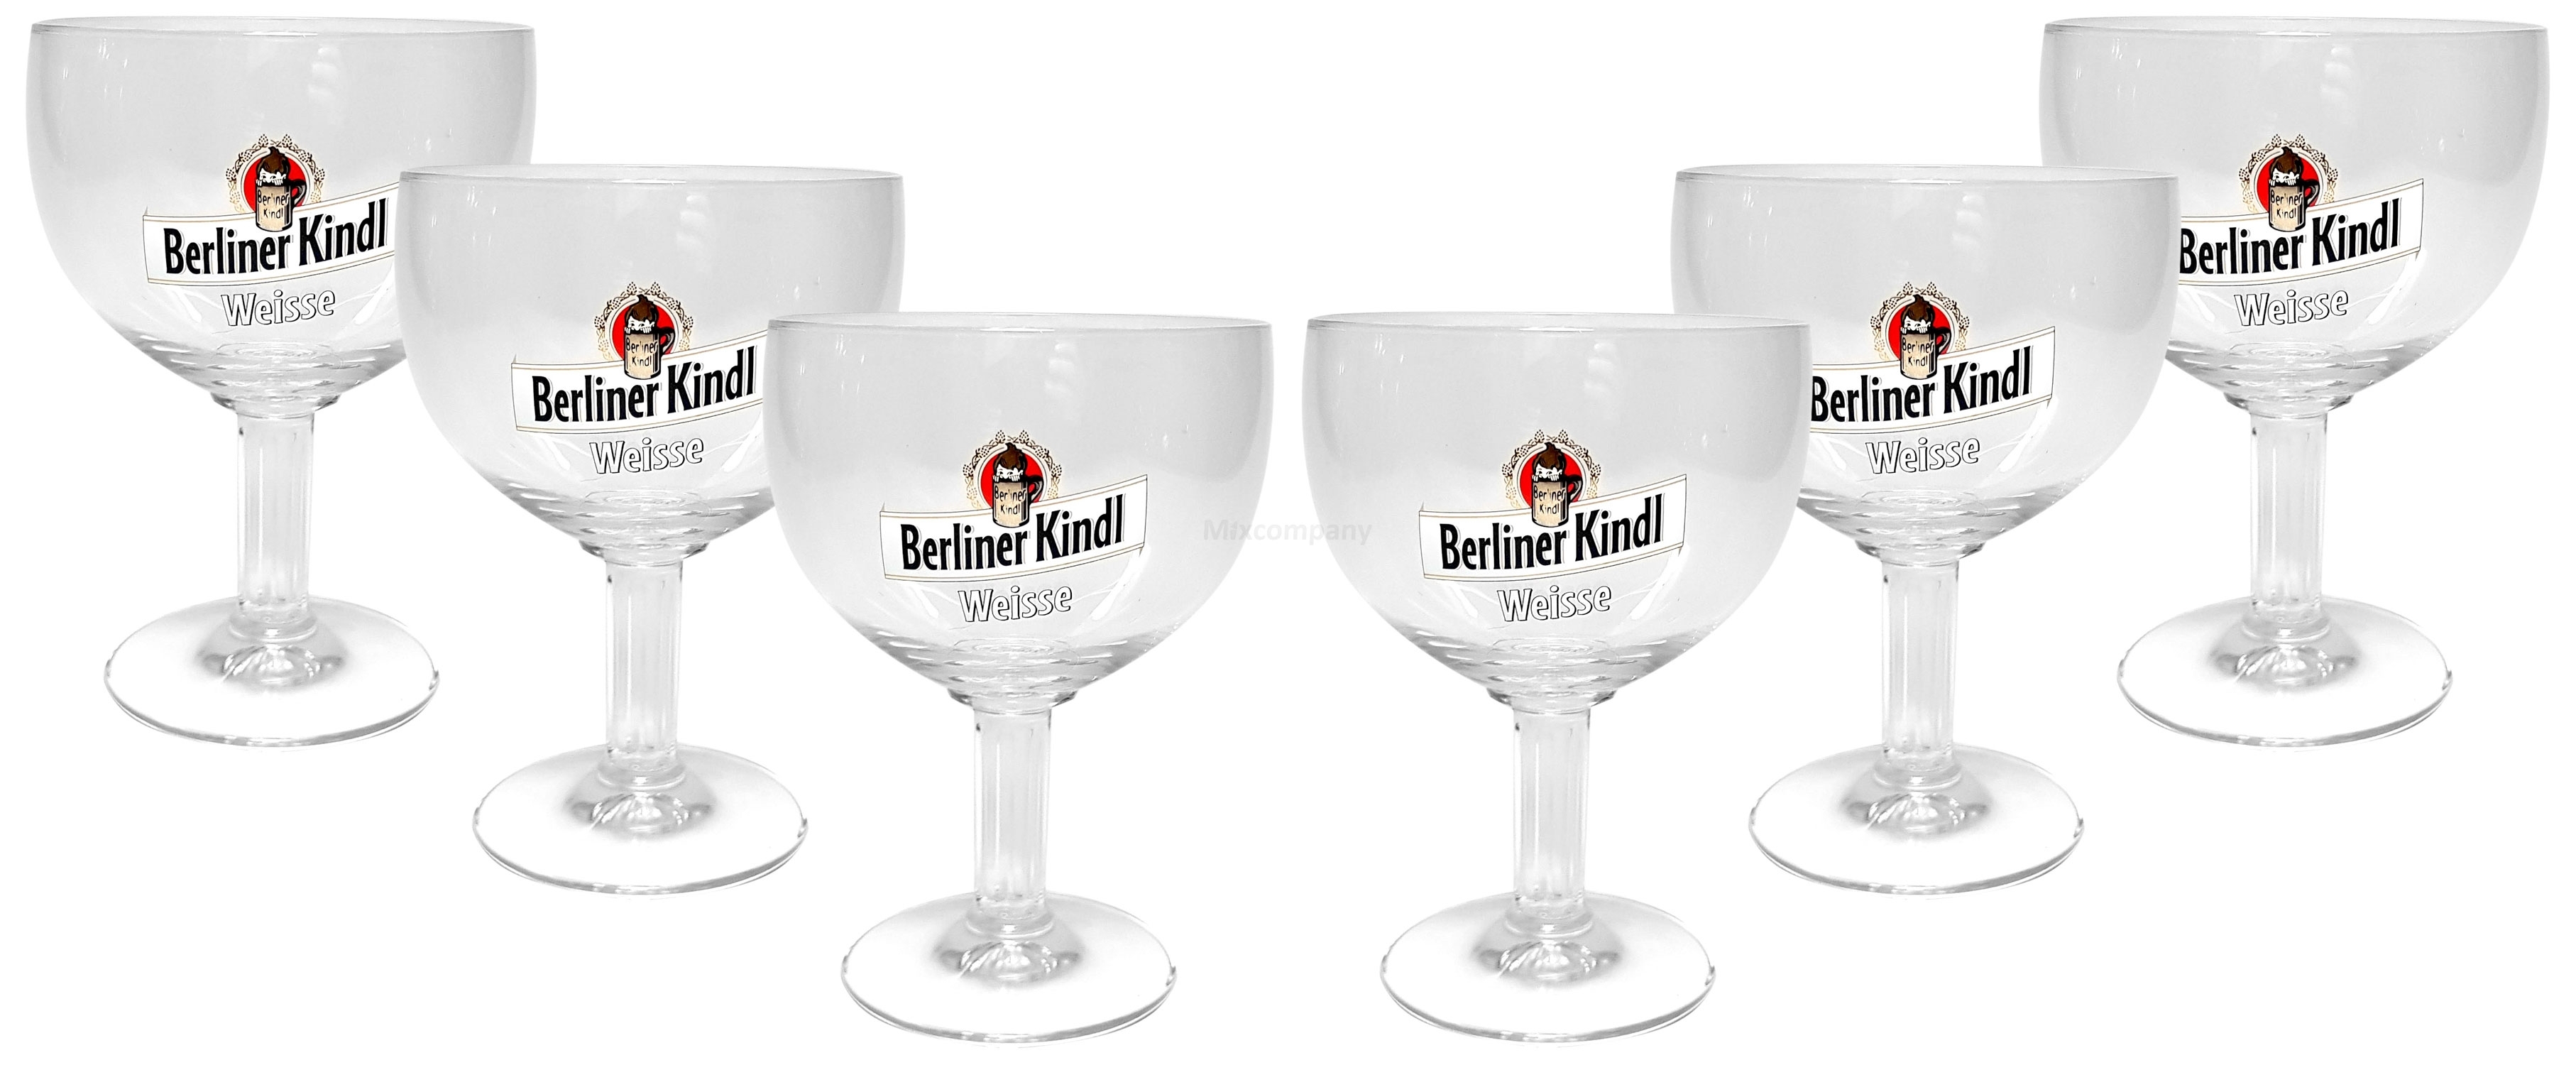 Berliner Kindl Weisse Pokal Glas Gläser-Set - 6x Pokalgläser